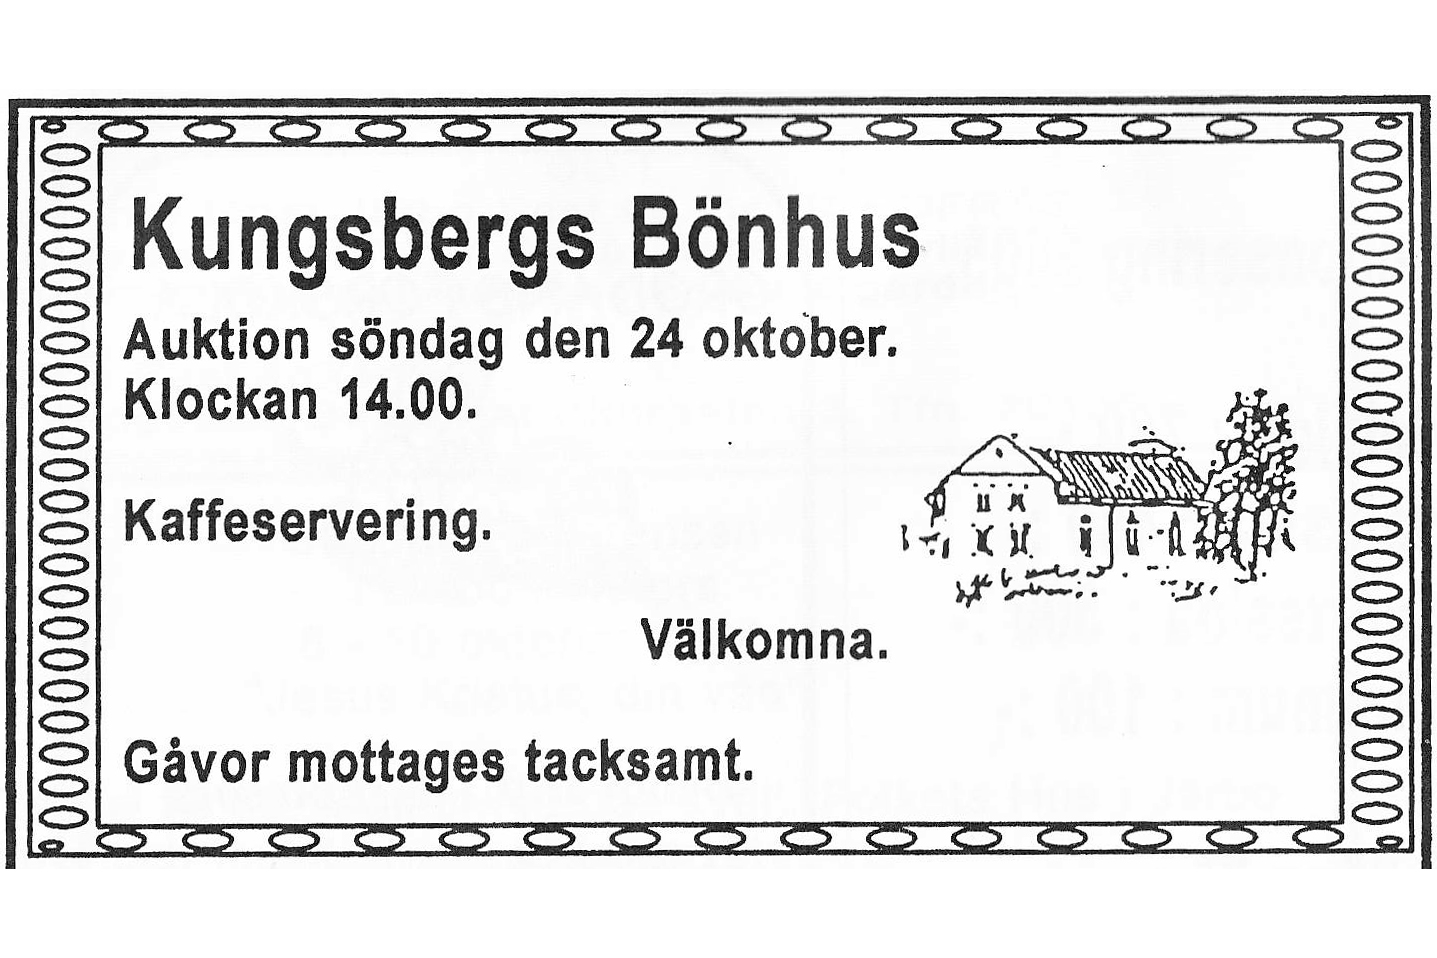 Kungsbergs bönhus